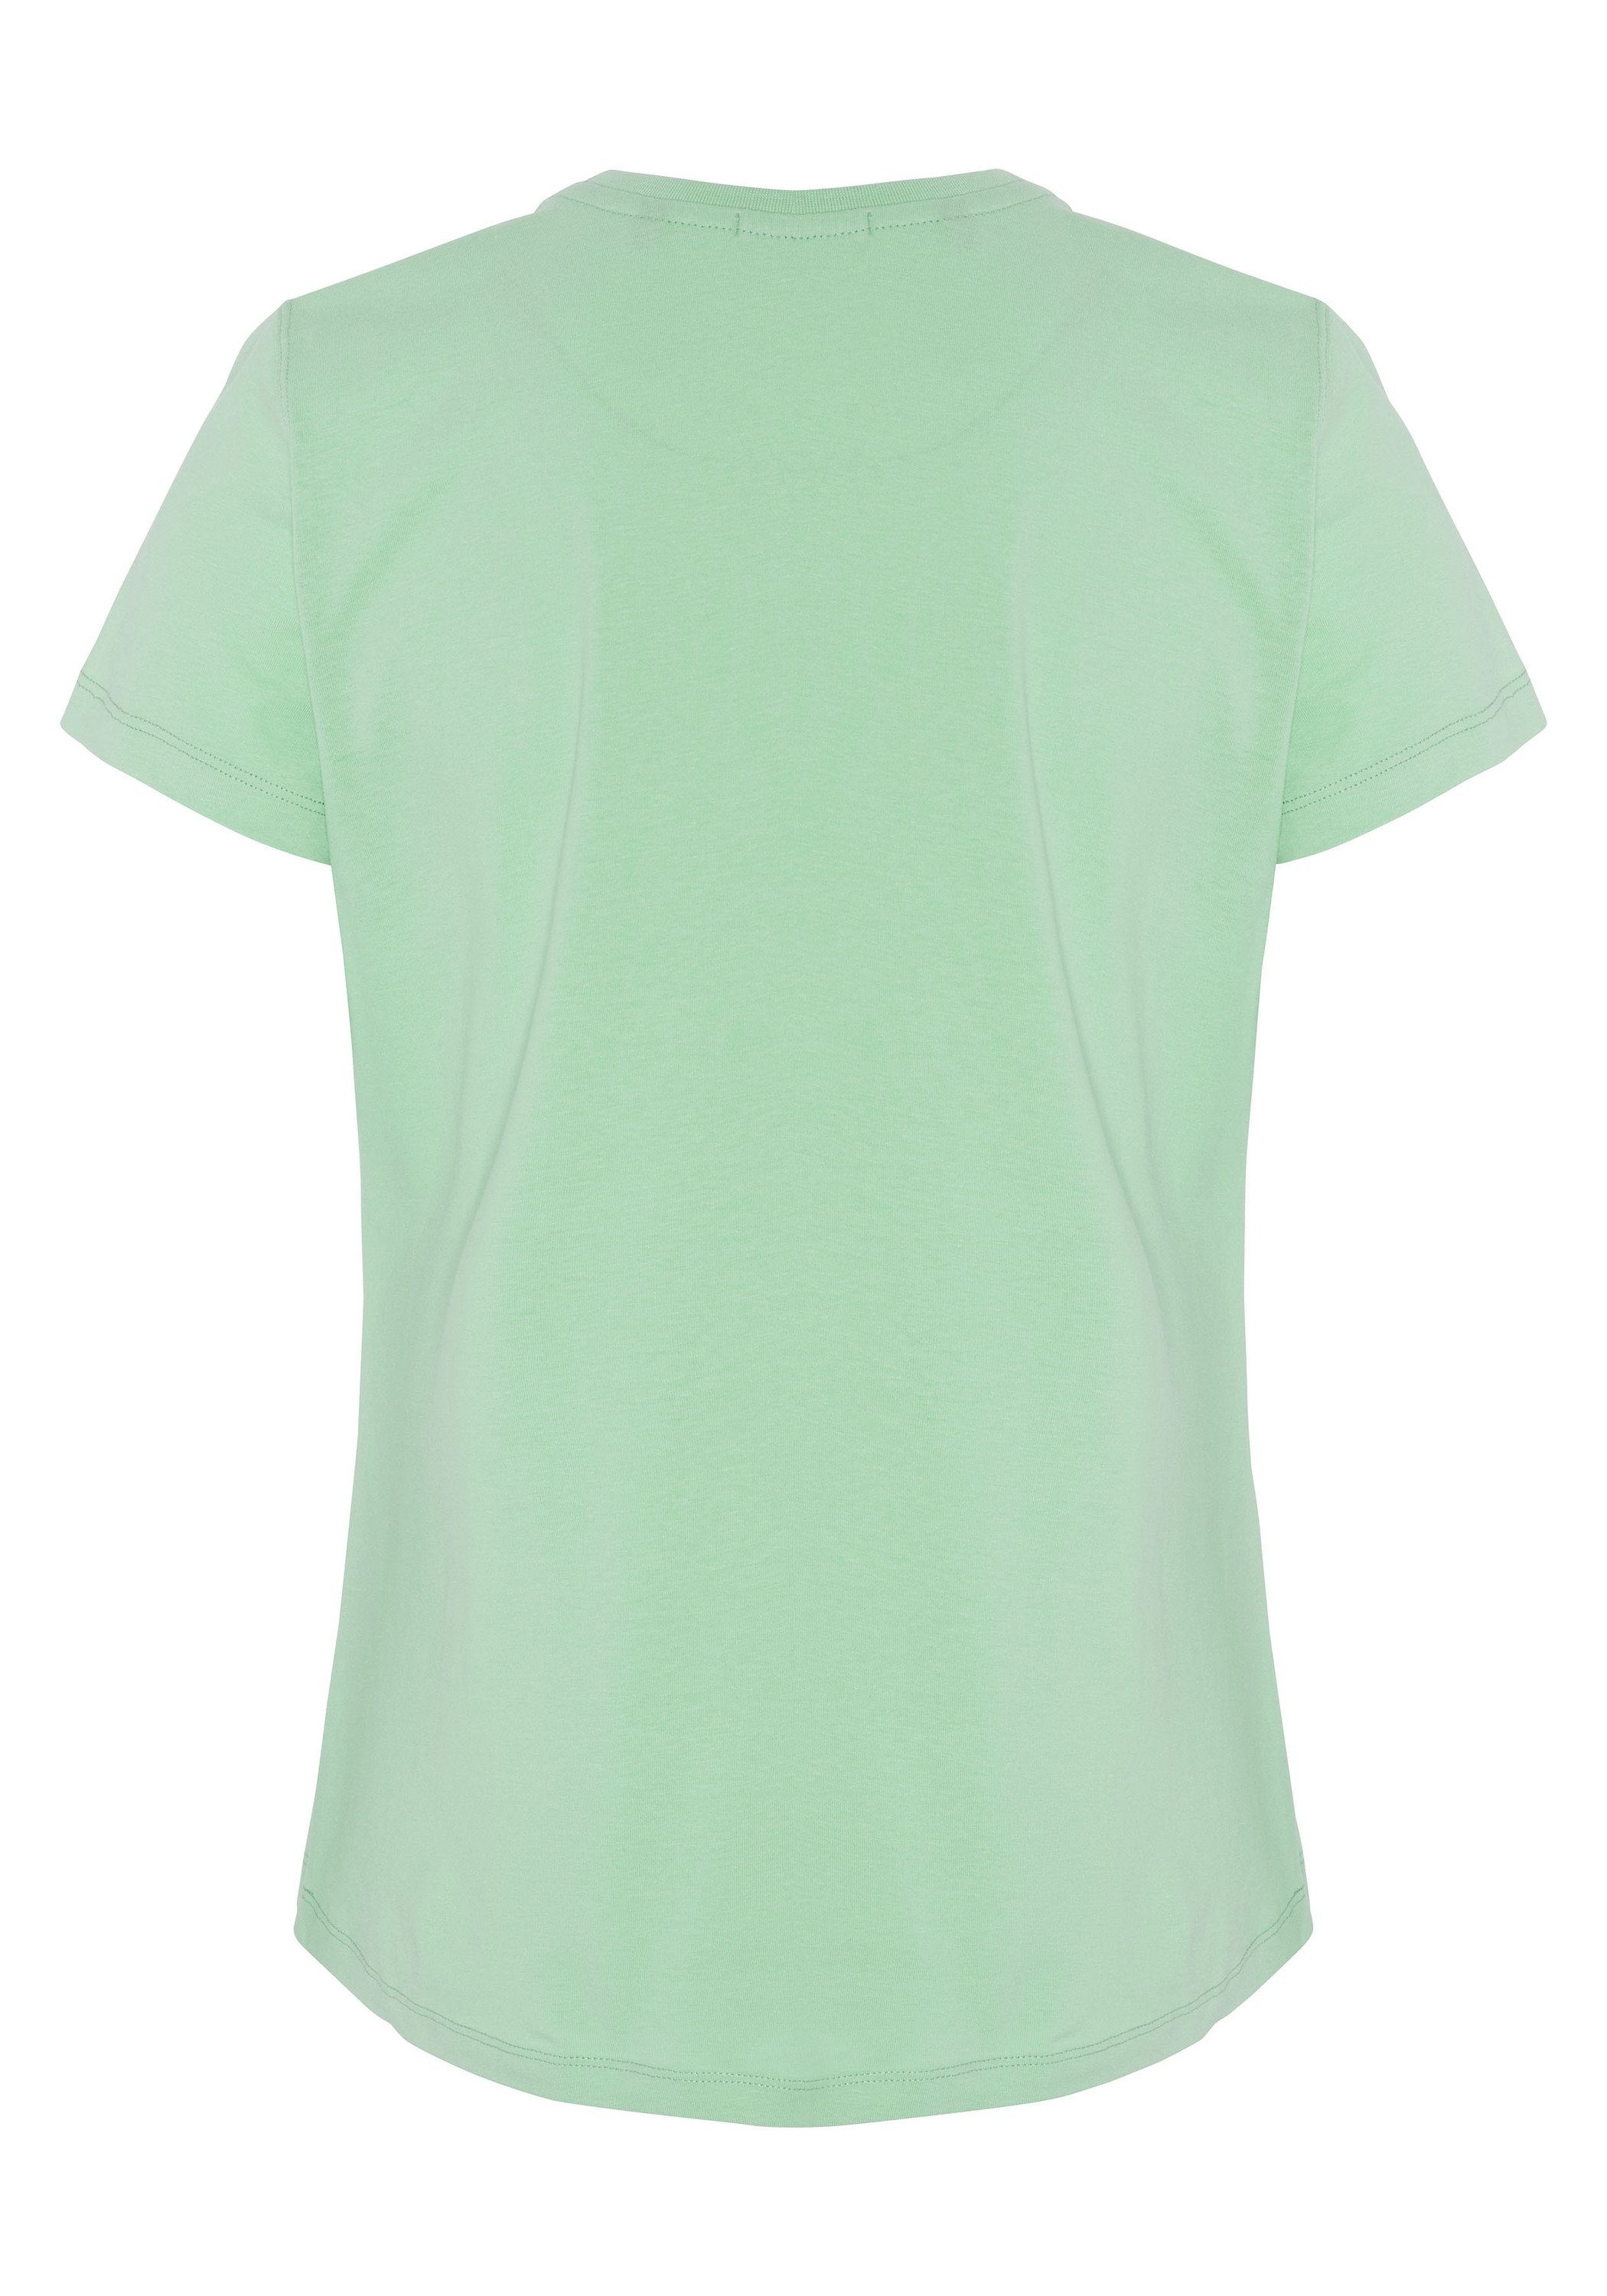 T-Shirt Frontprint Green Neptune Print-Shirt Chiemsee 1 farbenfrohem mit